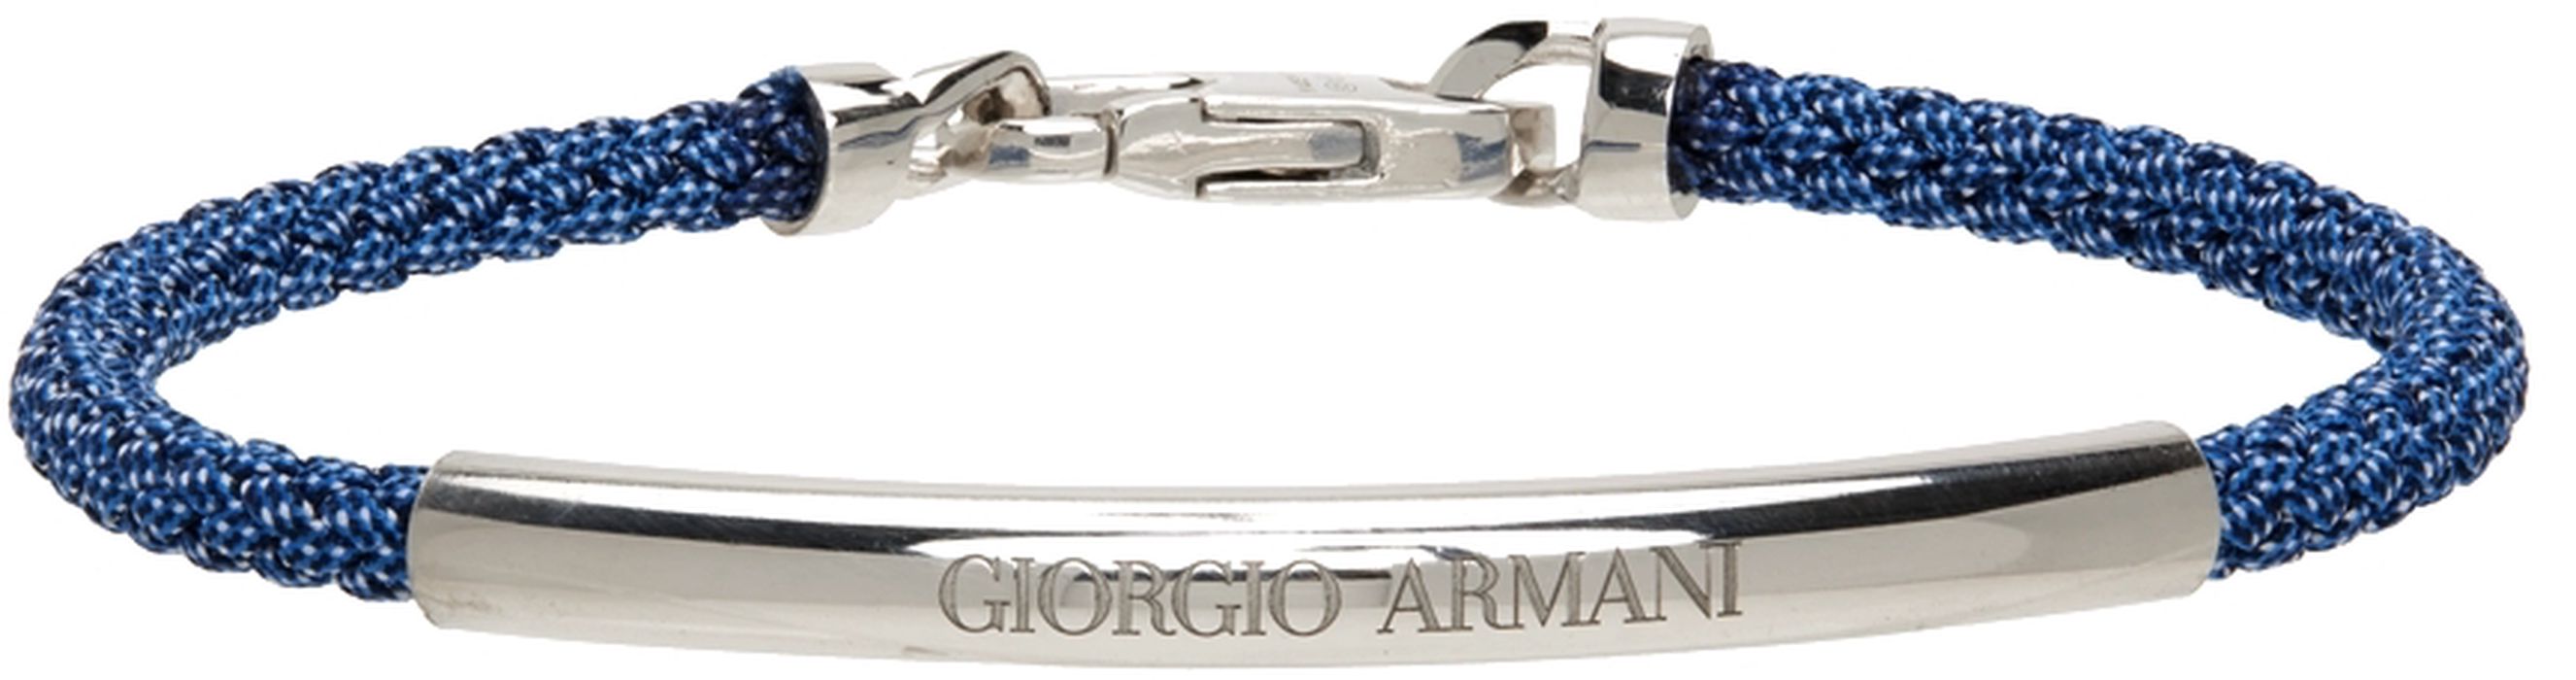 Giorgio Armani Blue Braided Bracelet